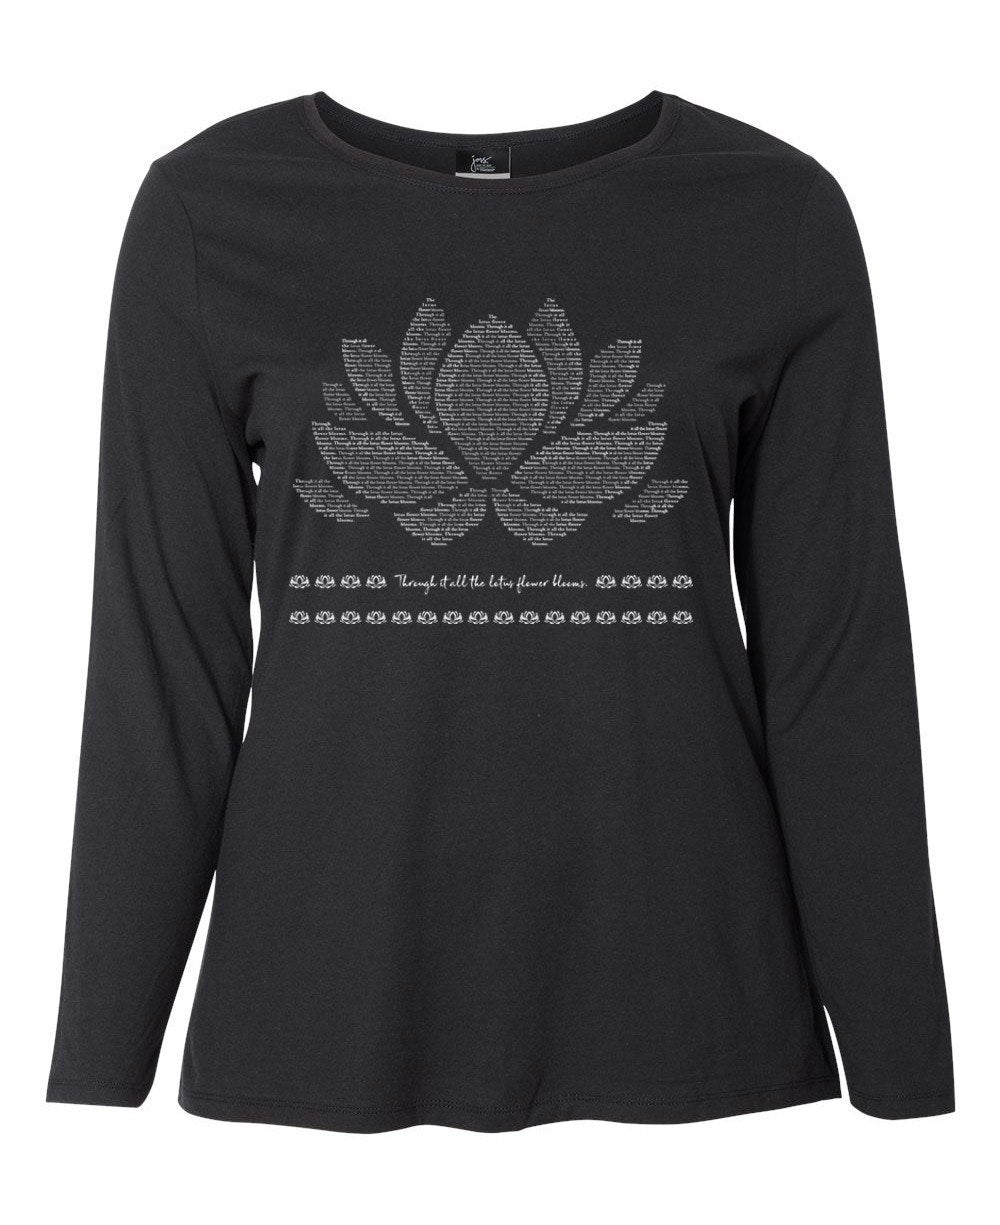 2XL Plus Size Through It All Lotus Flower Blooms T-Shirt - Apparel 2XL